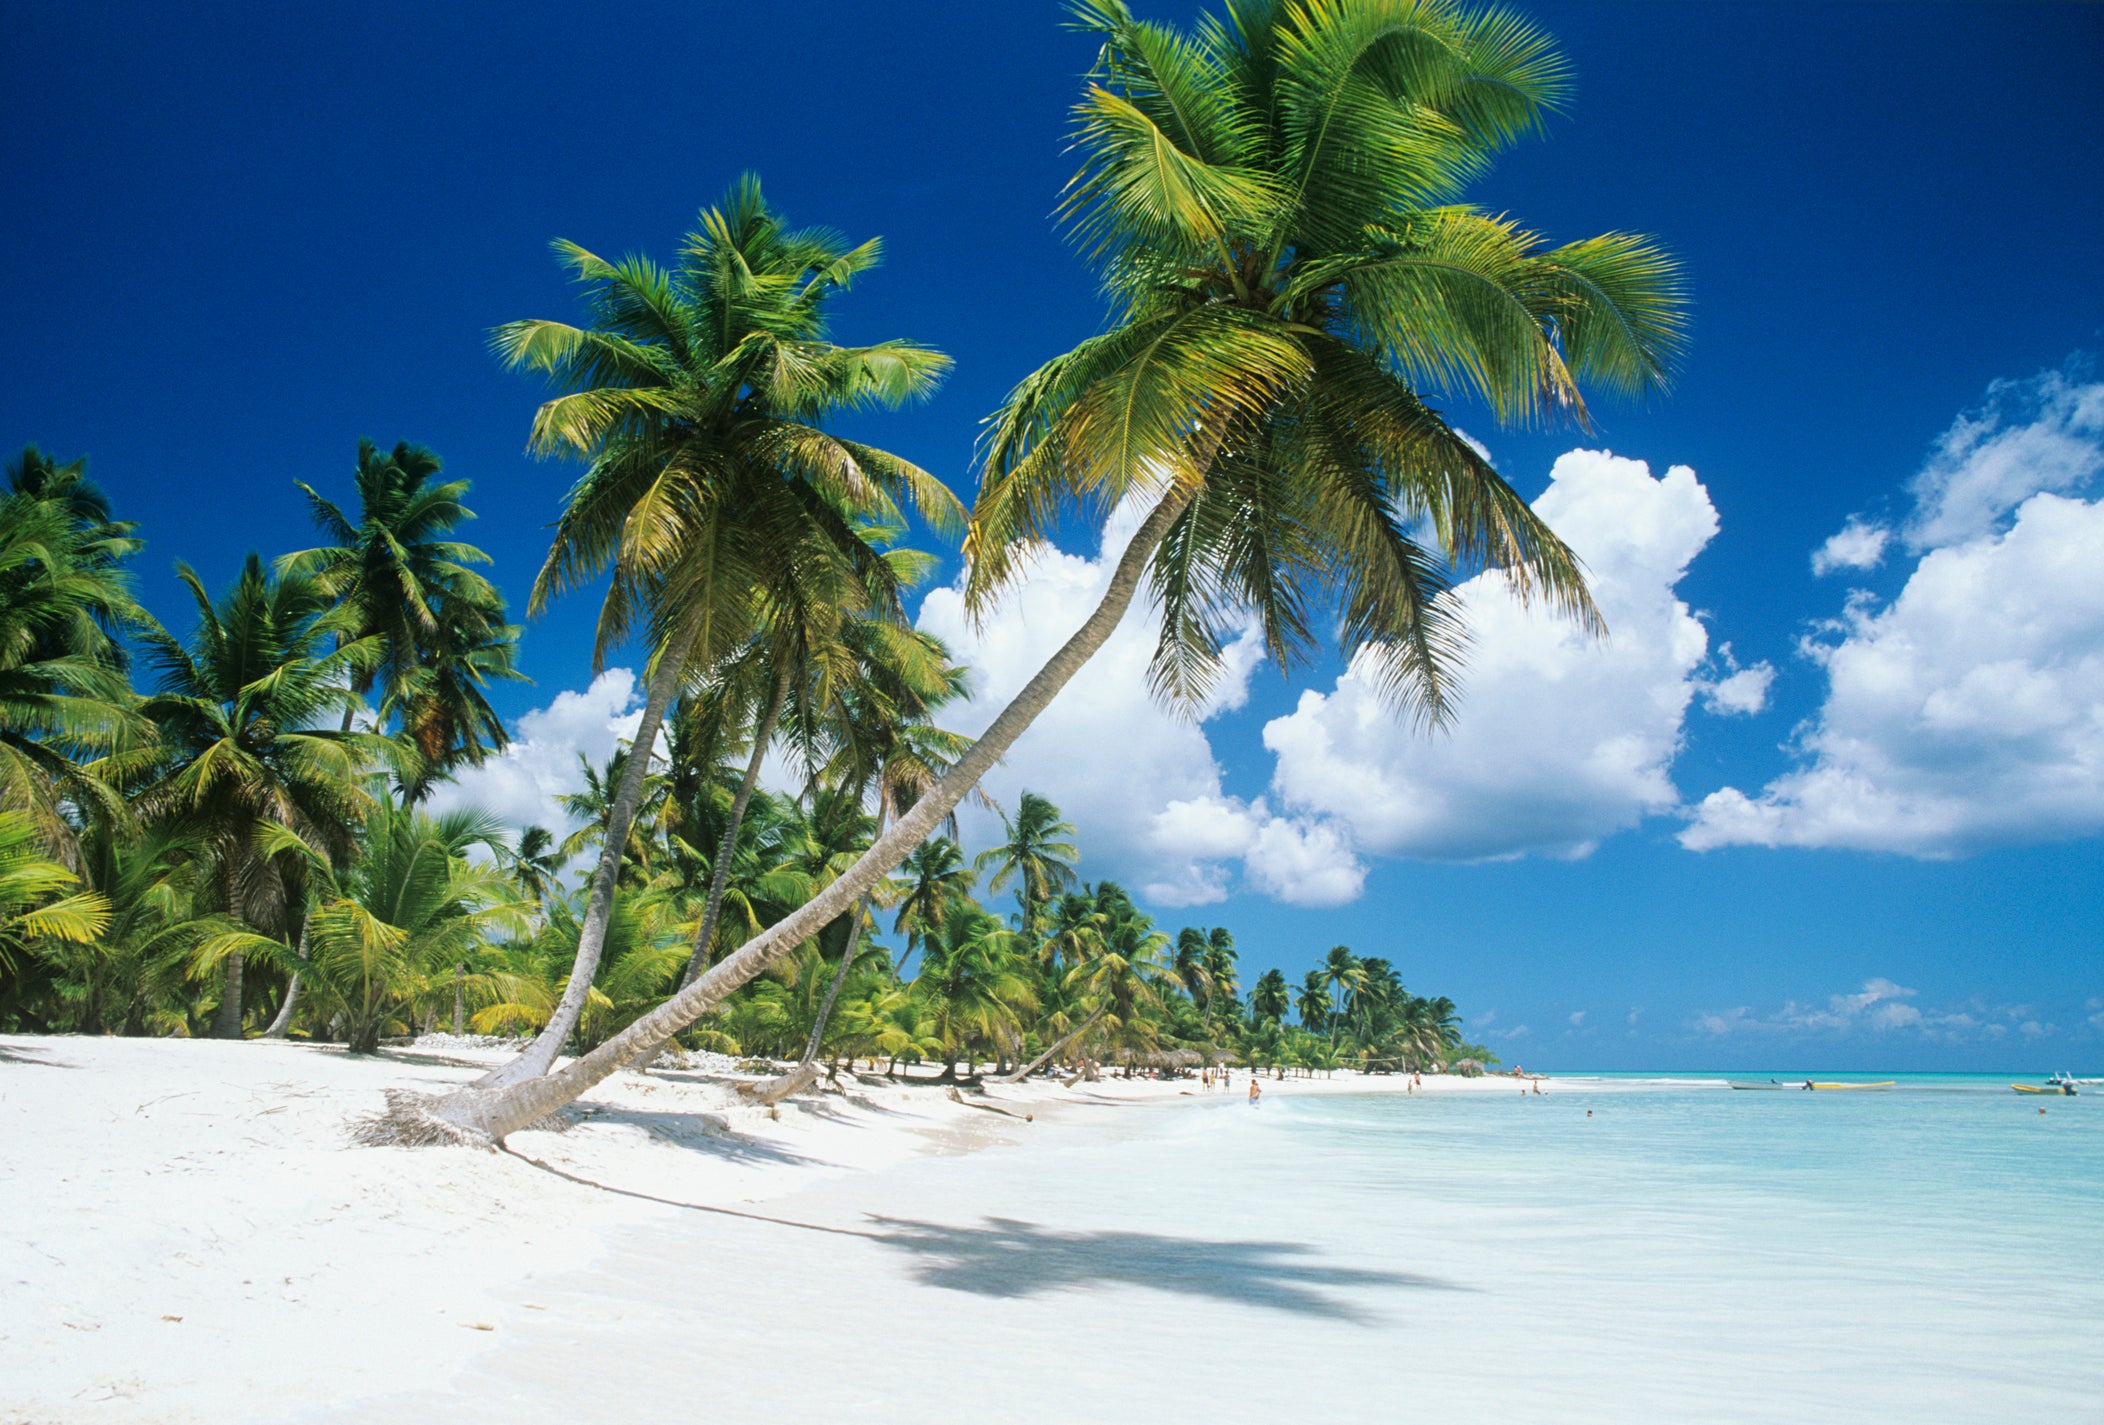 Dominican Republic, Saona Island, Palm trees on beach